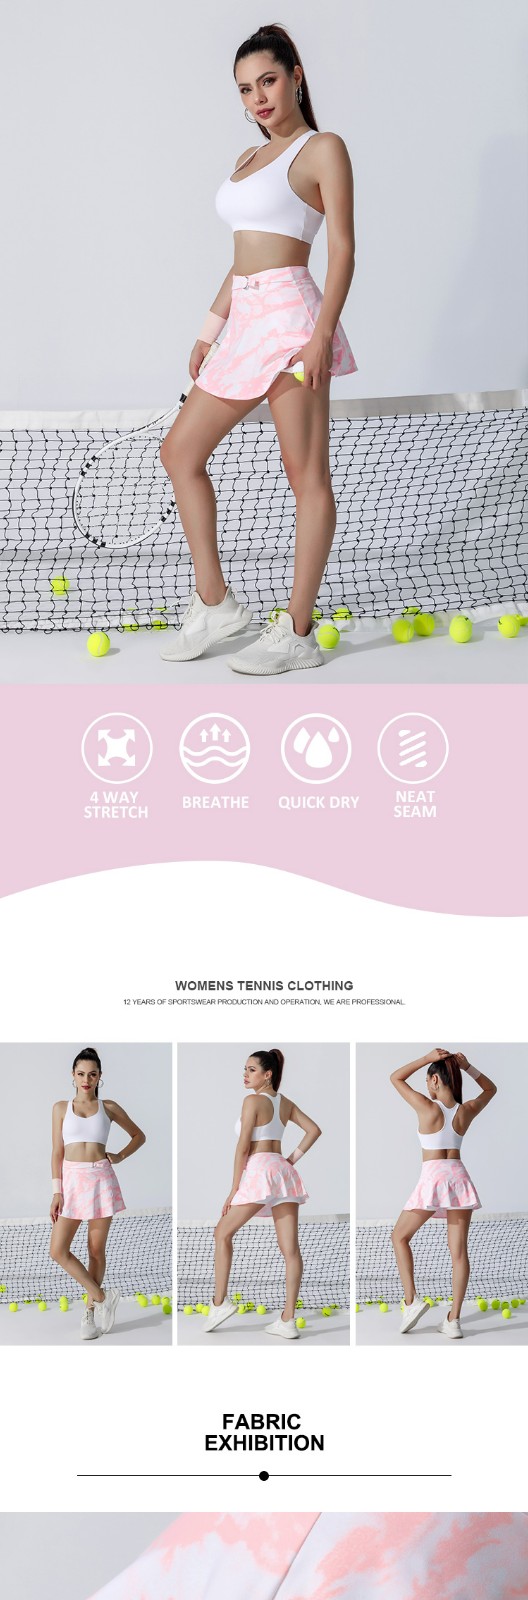 INGOR woman tennis shorts owner for girls-2